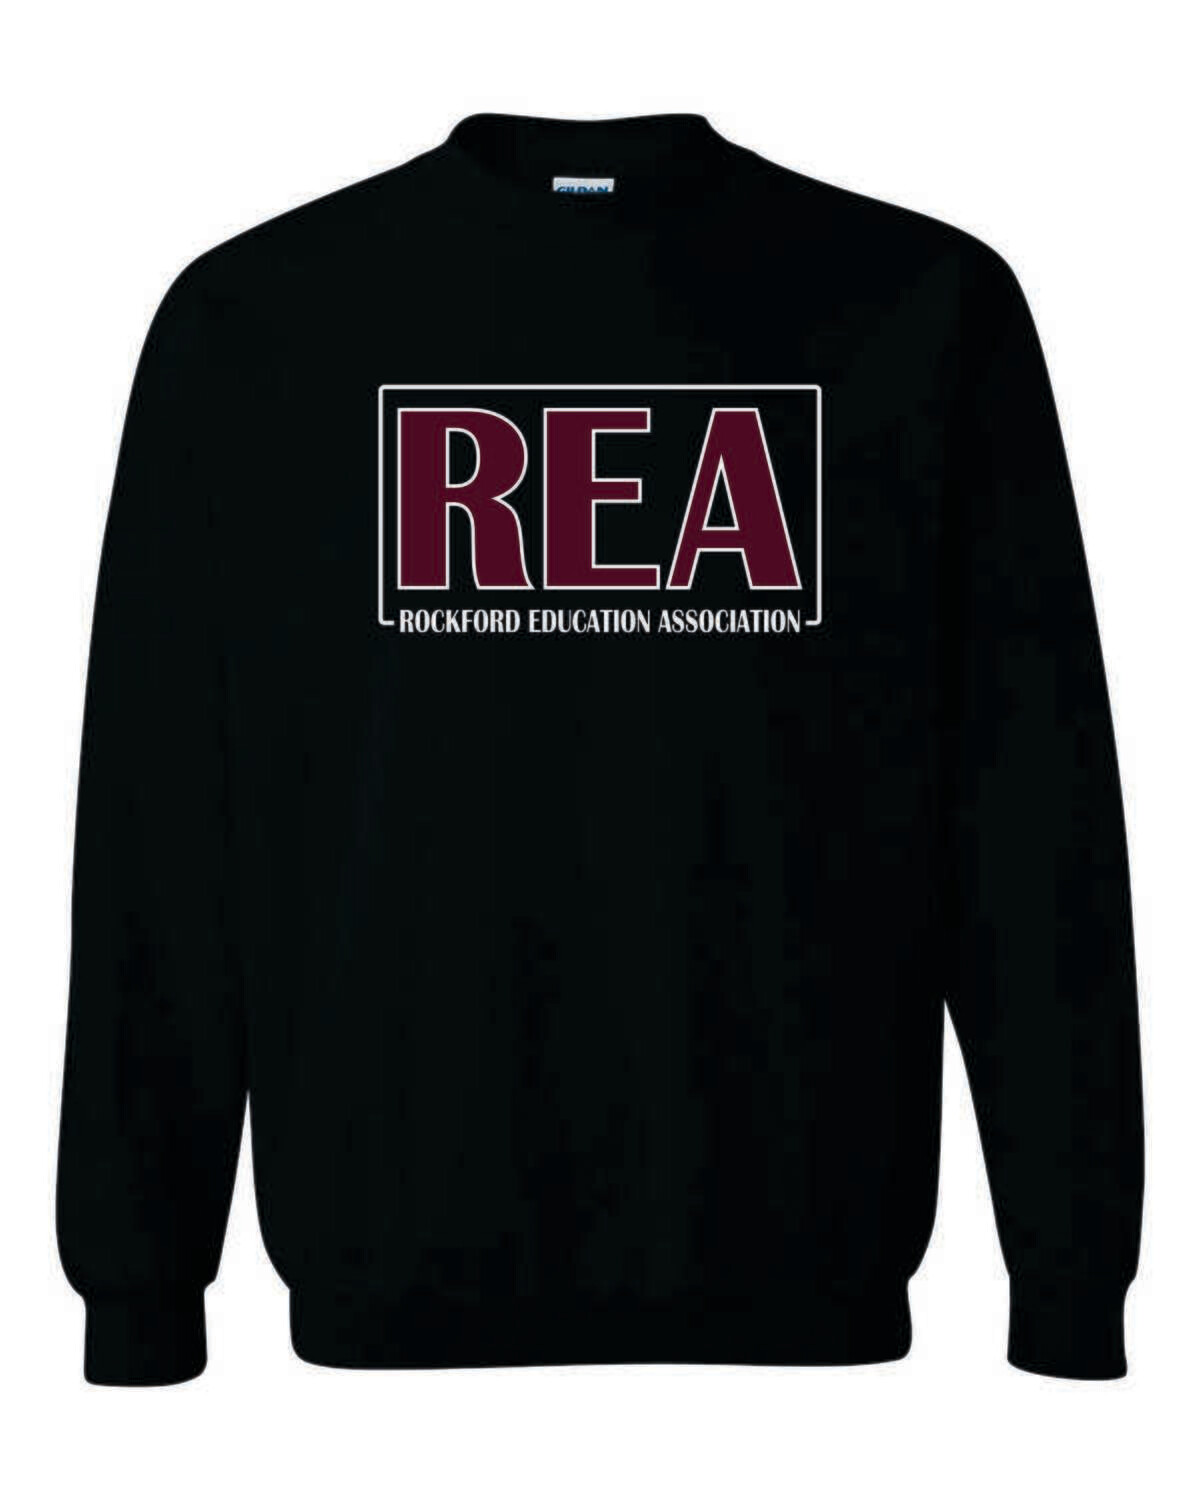 Rockford Education Association Crewneck Sweatshirt, Black, GLITTER LOGO